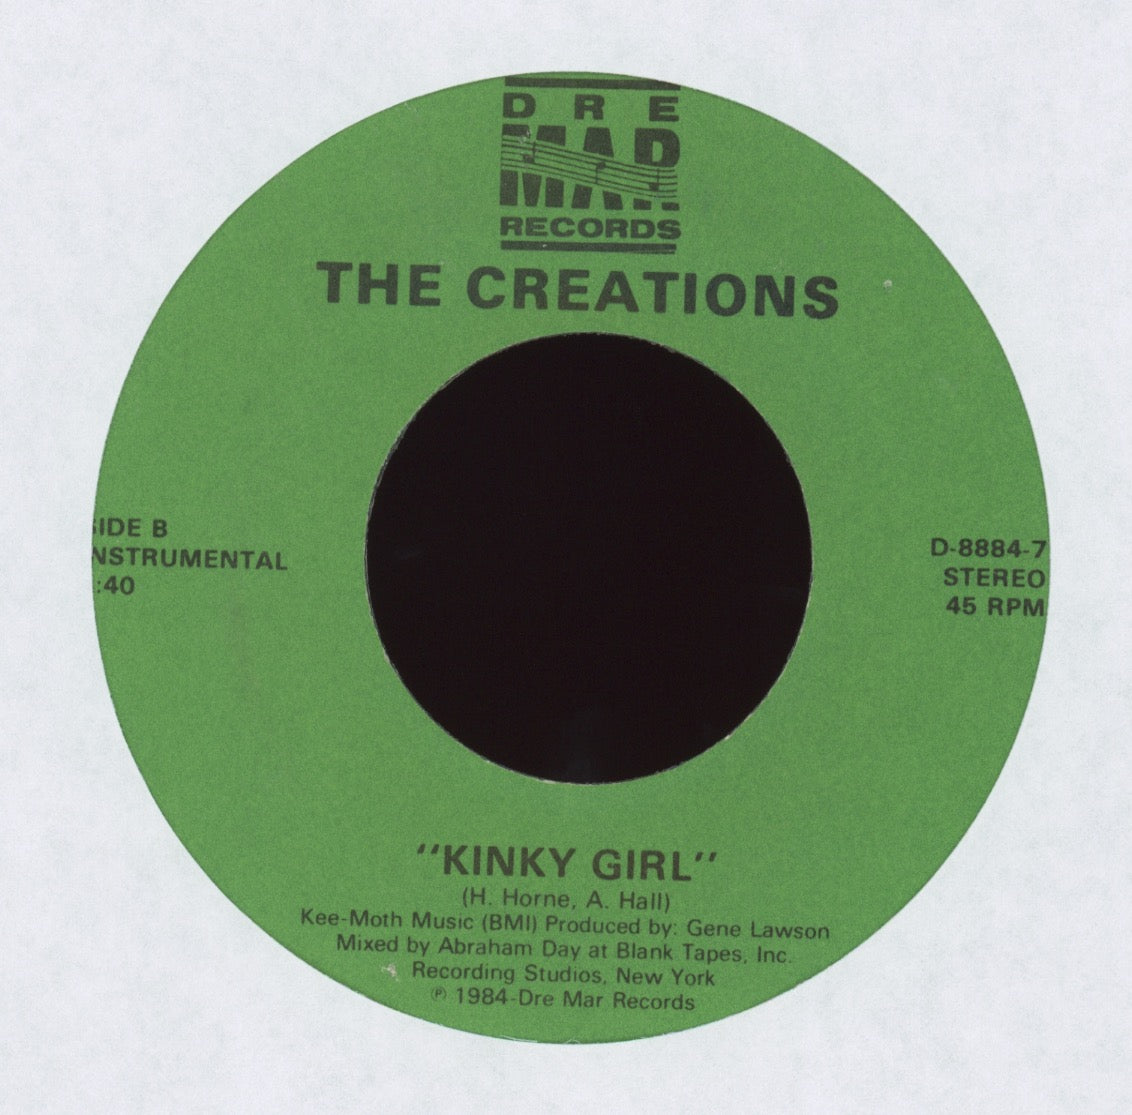 The Creations - Kinky Girl on Dre Mar